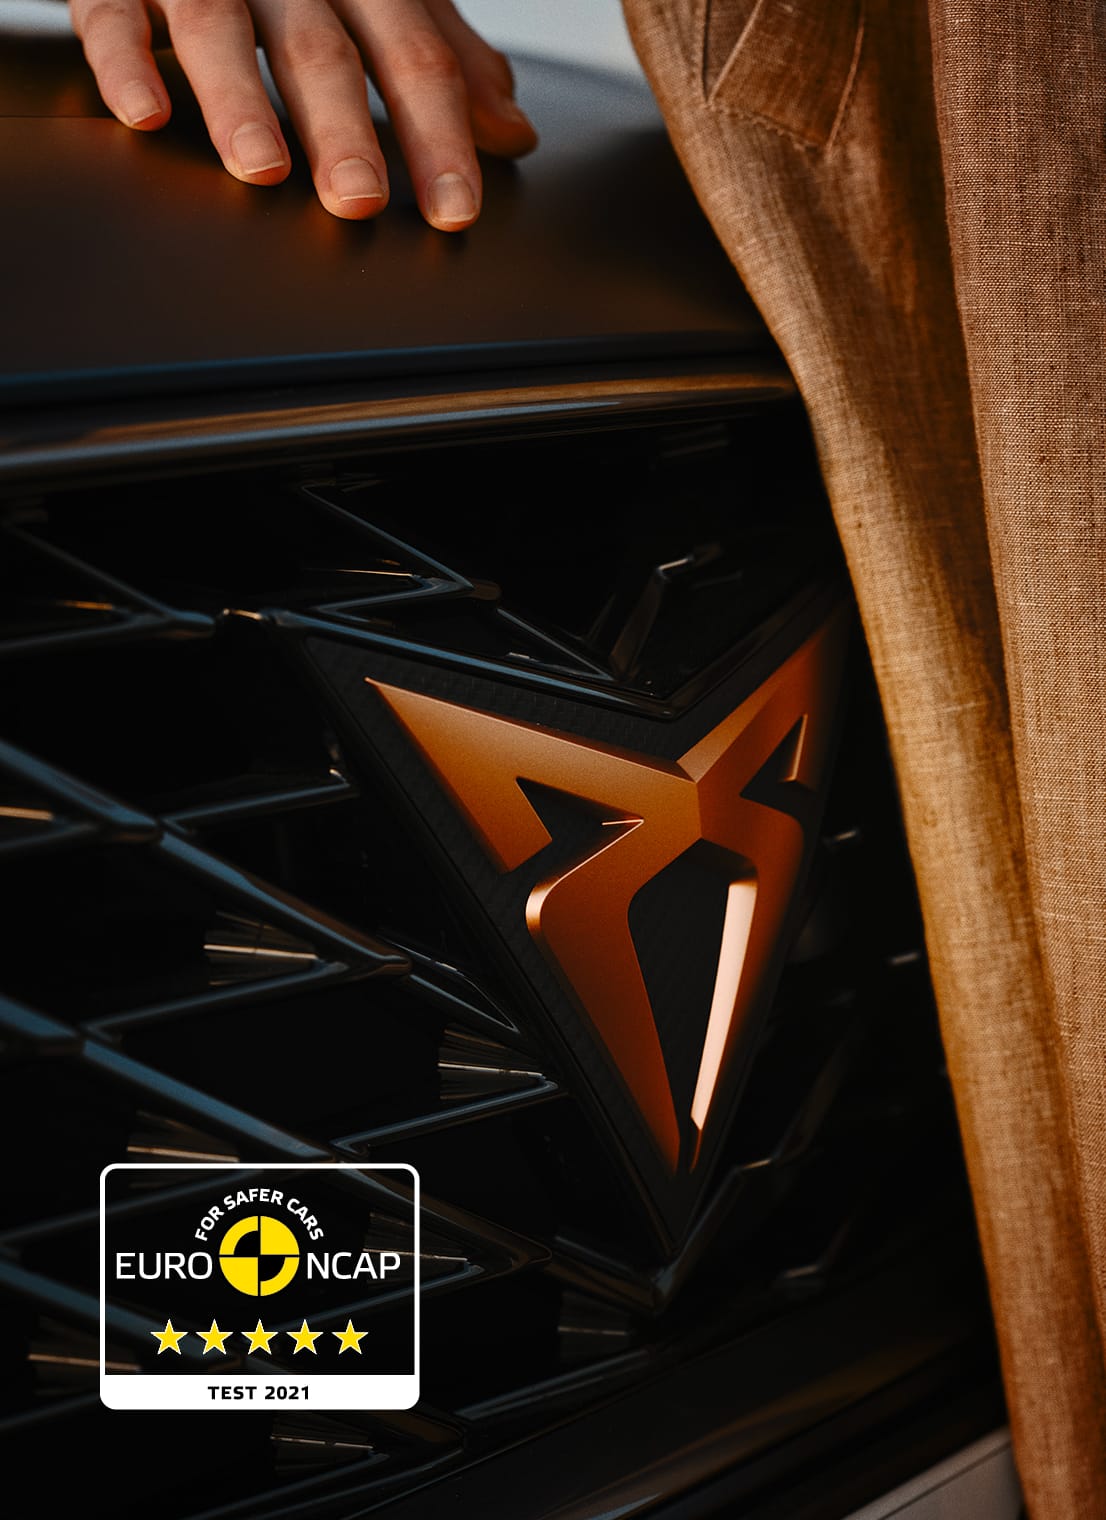 CUPRA Formentor Euro NCAP täydet 5 tähteä